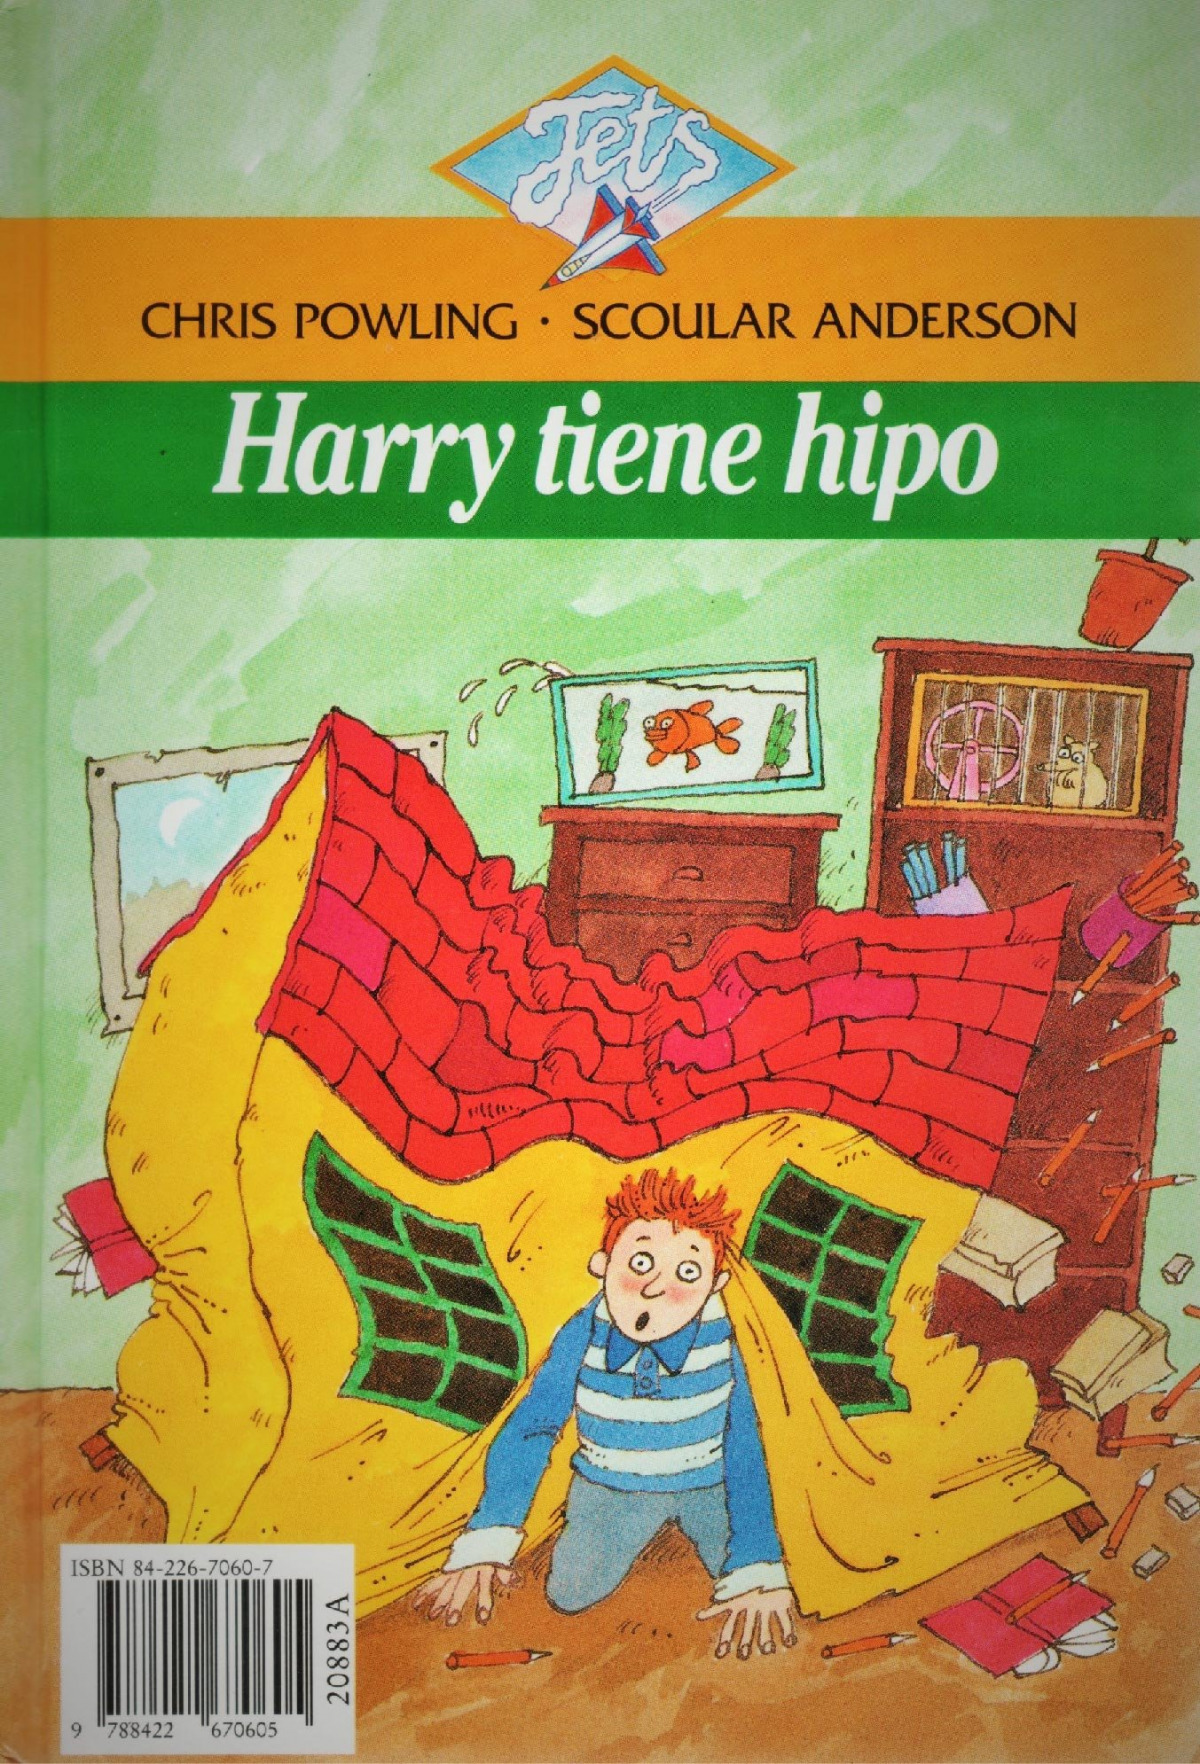 Harry tiene hipo - Powling, Chris / Anderson, Scoular